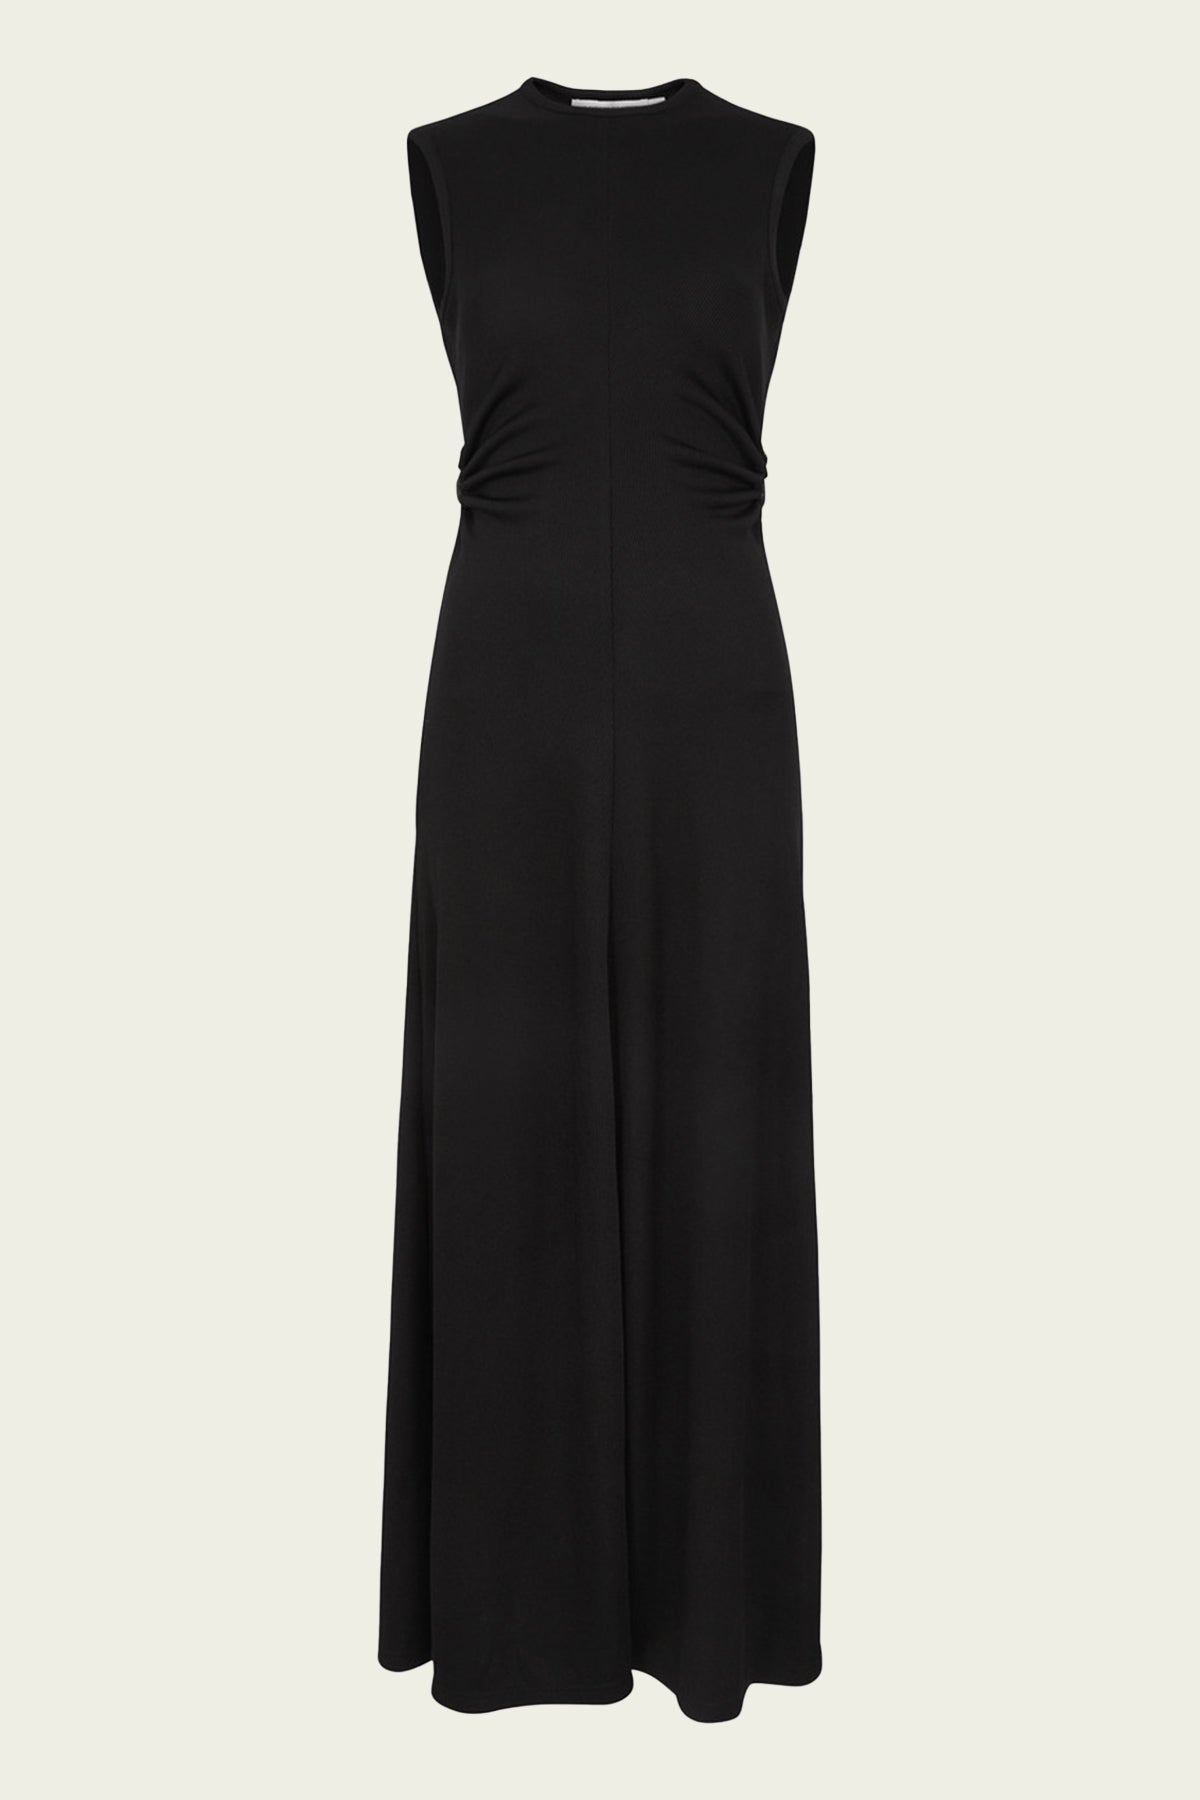 Orbit Fran Dress in Black - shop-olivia.com